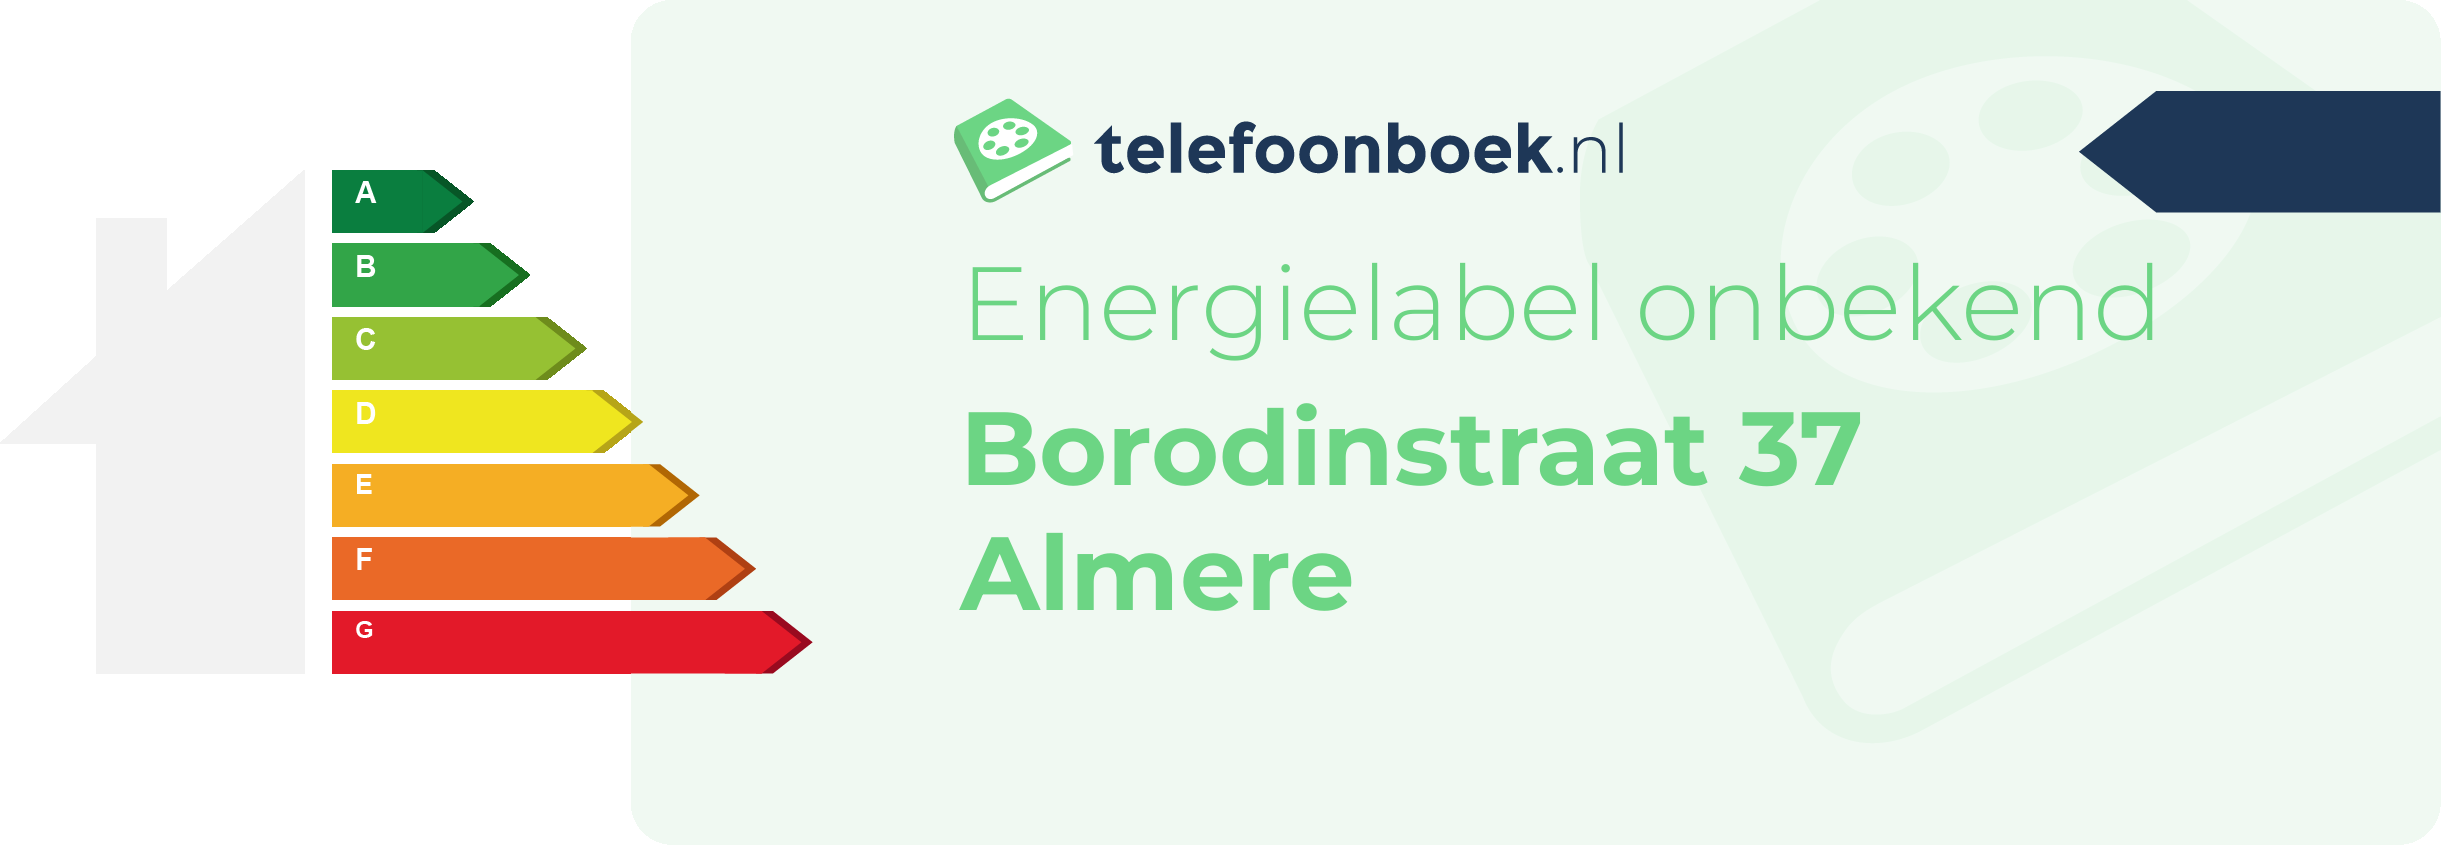 Energielabel Borodinstraat 37 Almere